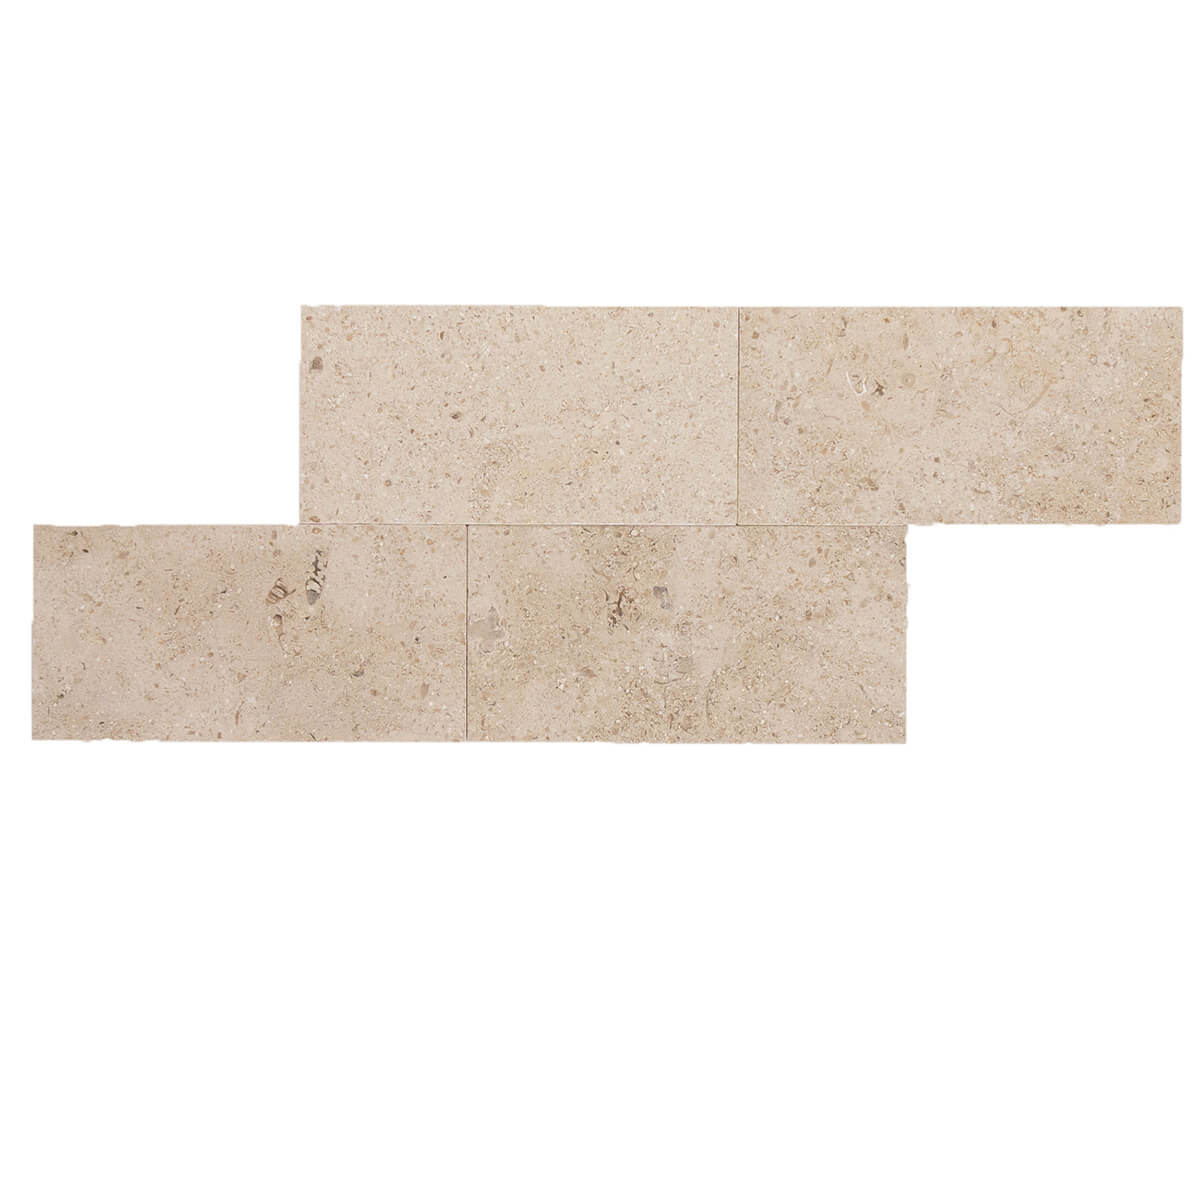 haussmann fonjone gascogne beige limestone rectangle natural stone field tile 3x6 honed